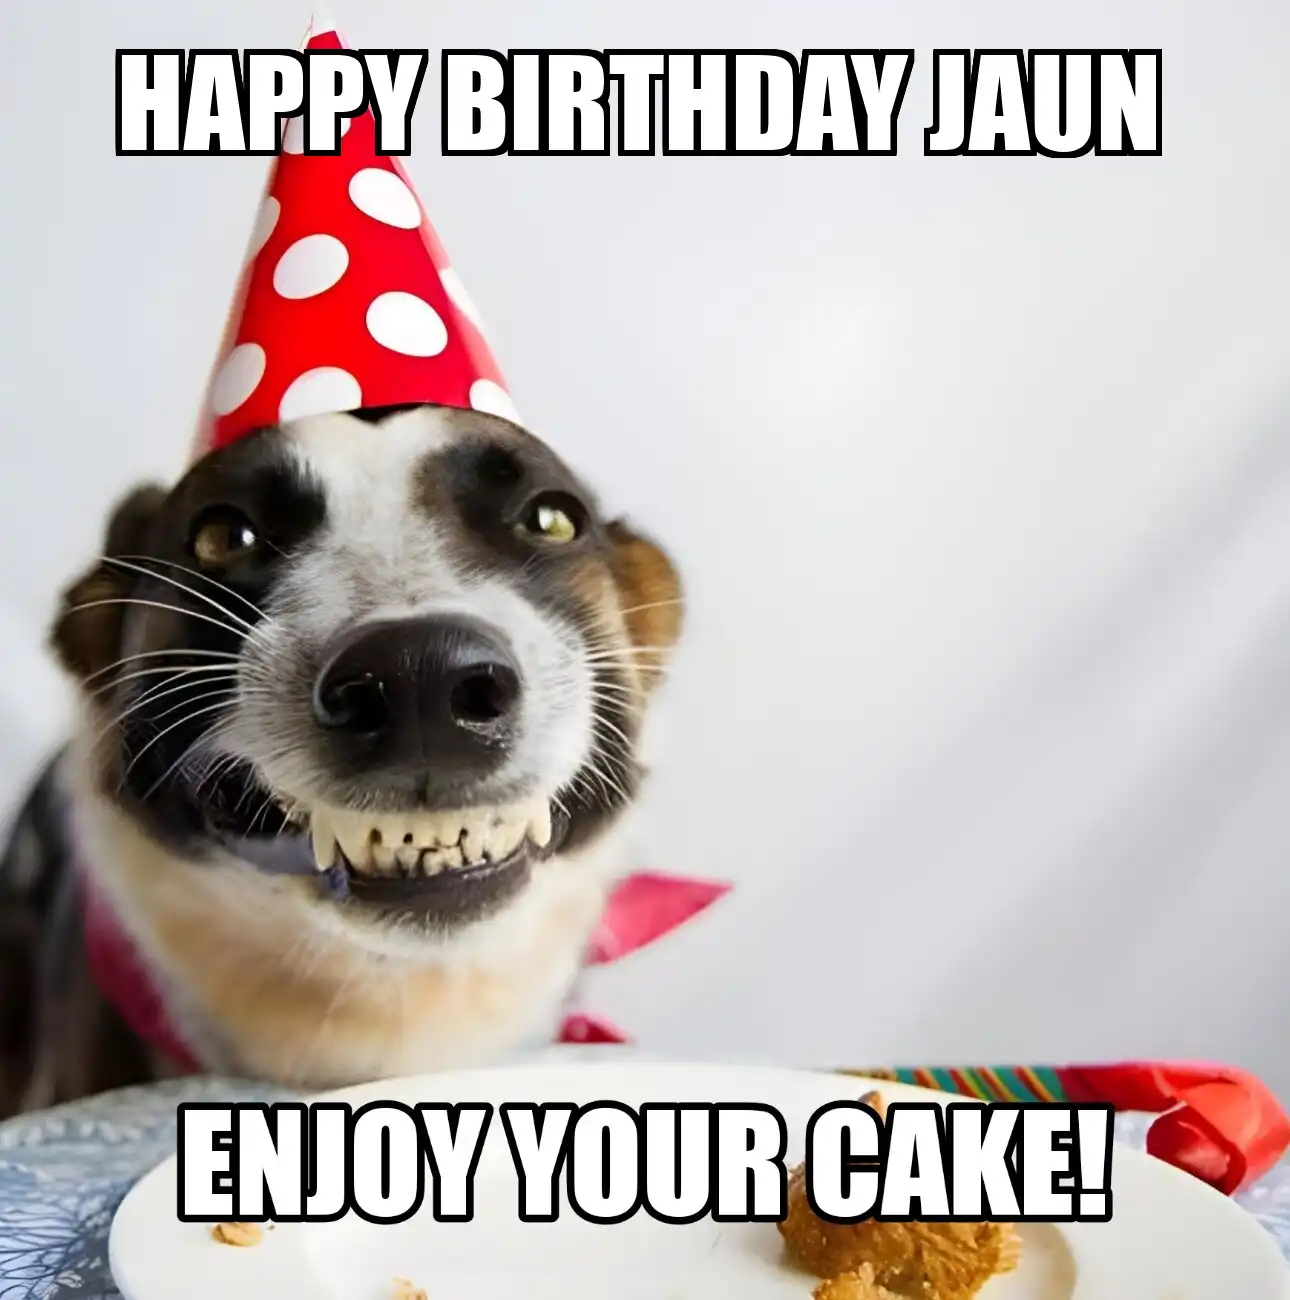 Happy Birthday Jaun Enjoy Your Cake Dog Meme